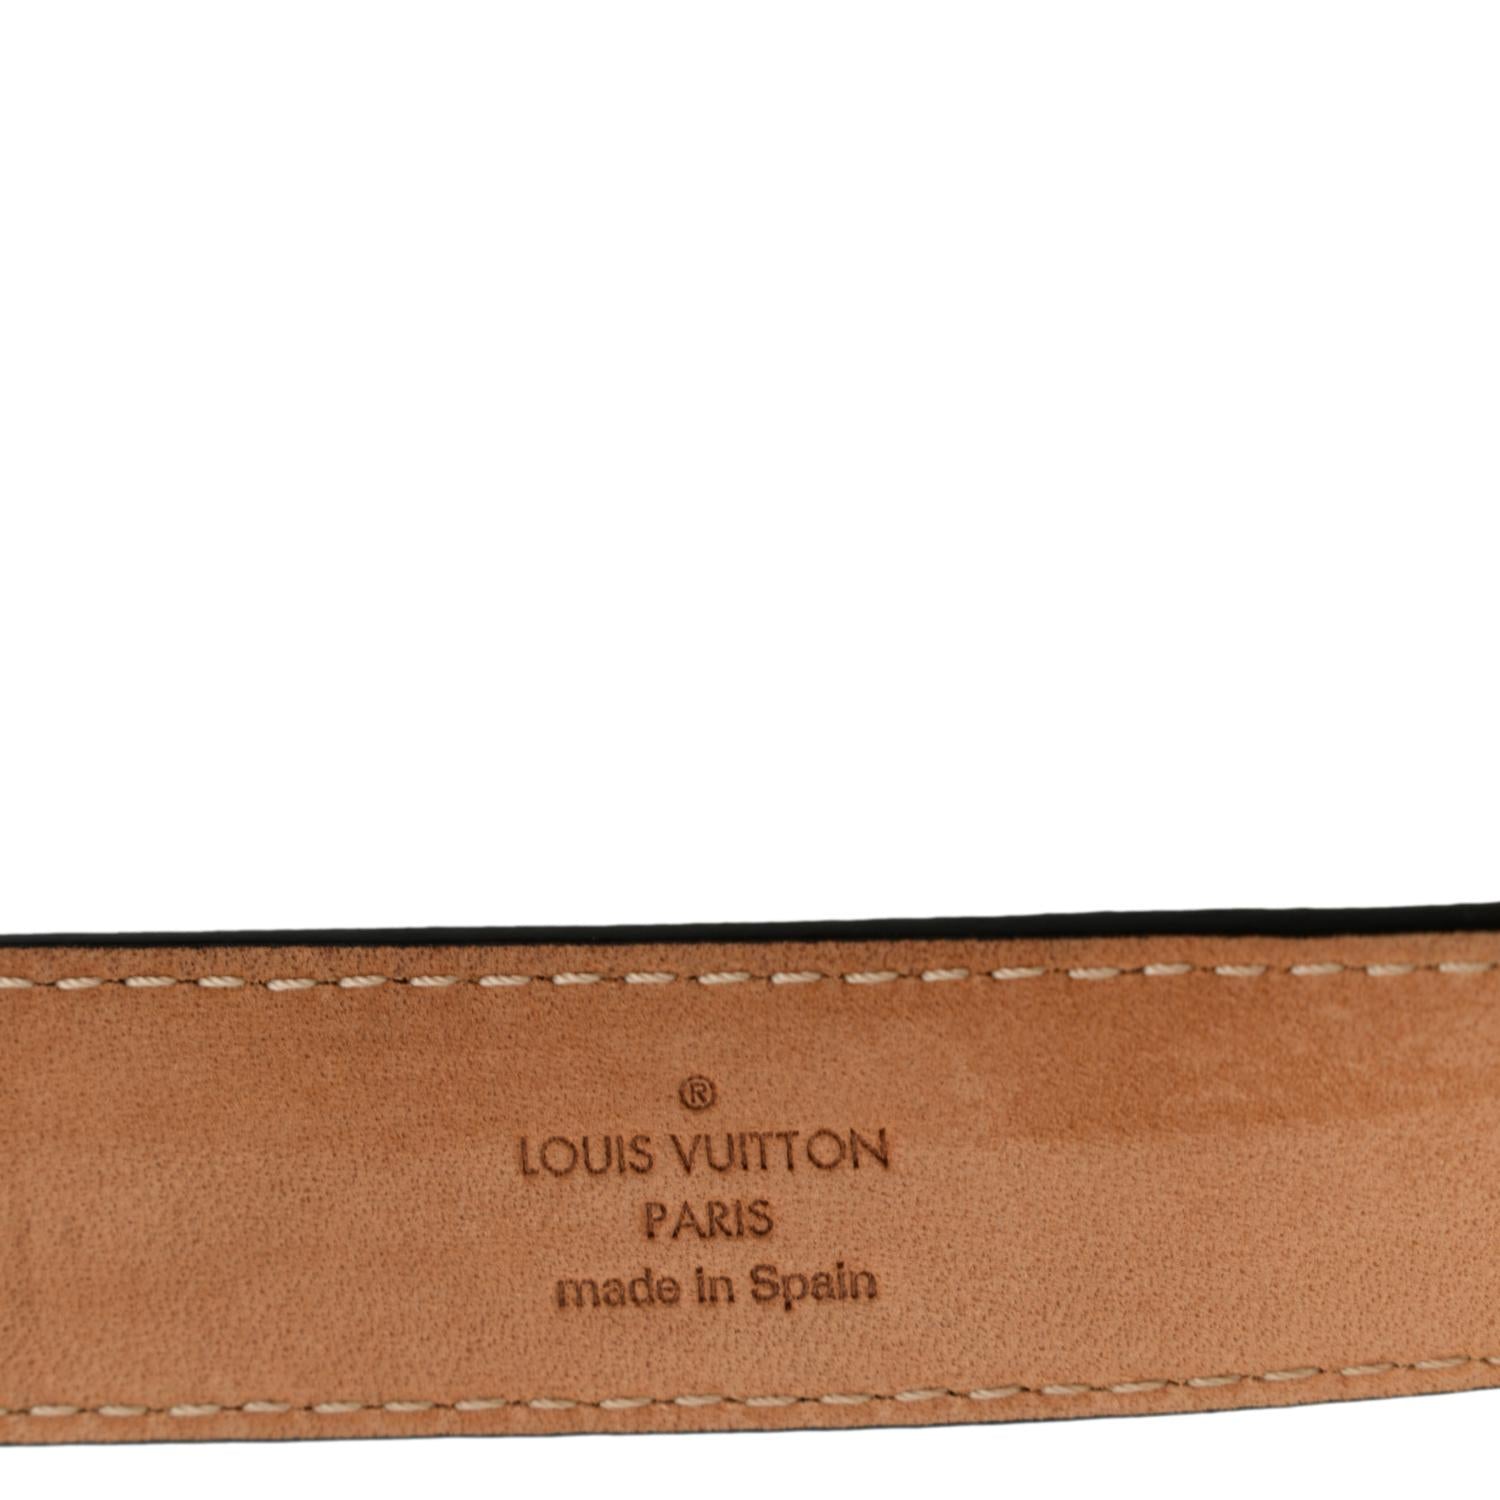 LOUIS VUITTON Mini Monogram Belt 25mm - More Than You Can Imagine